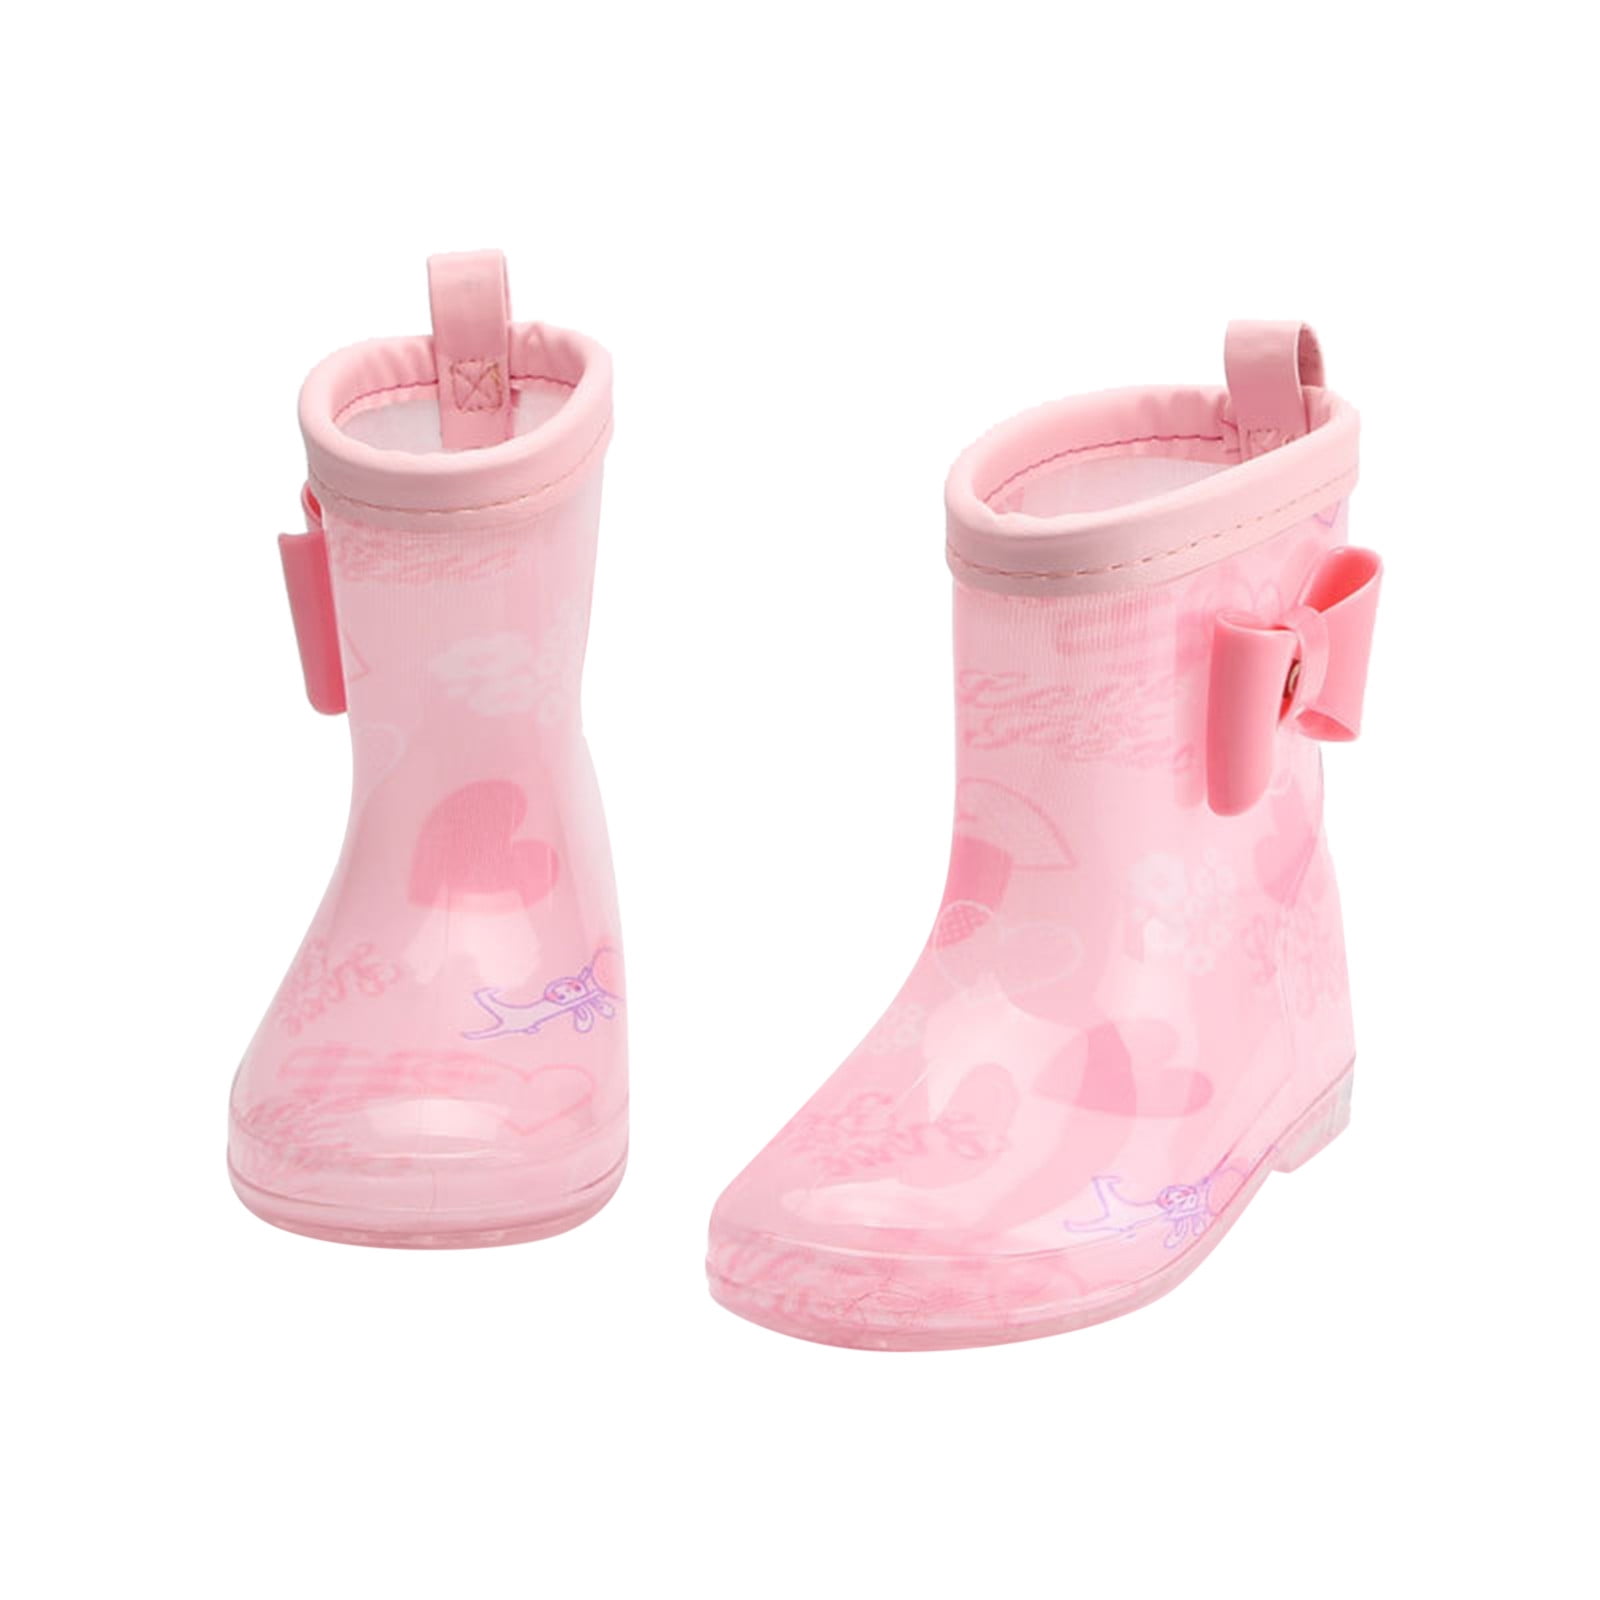 Youmylove Toddler Kids Waterproof Rain Boots Cartoon Bowknot Infant ...